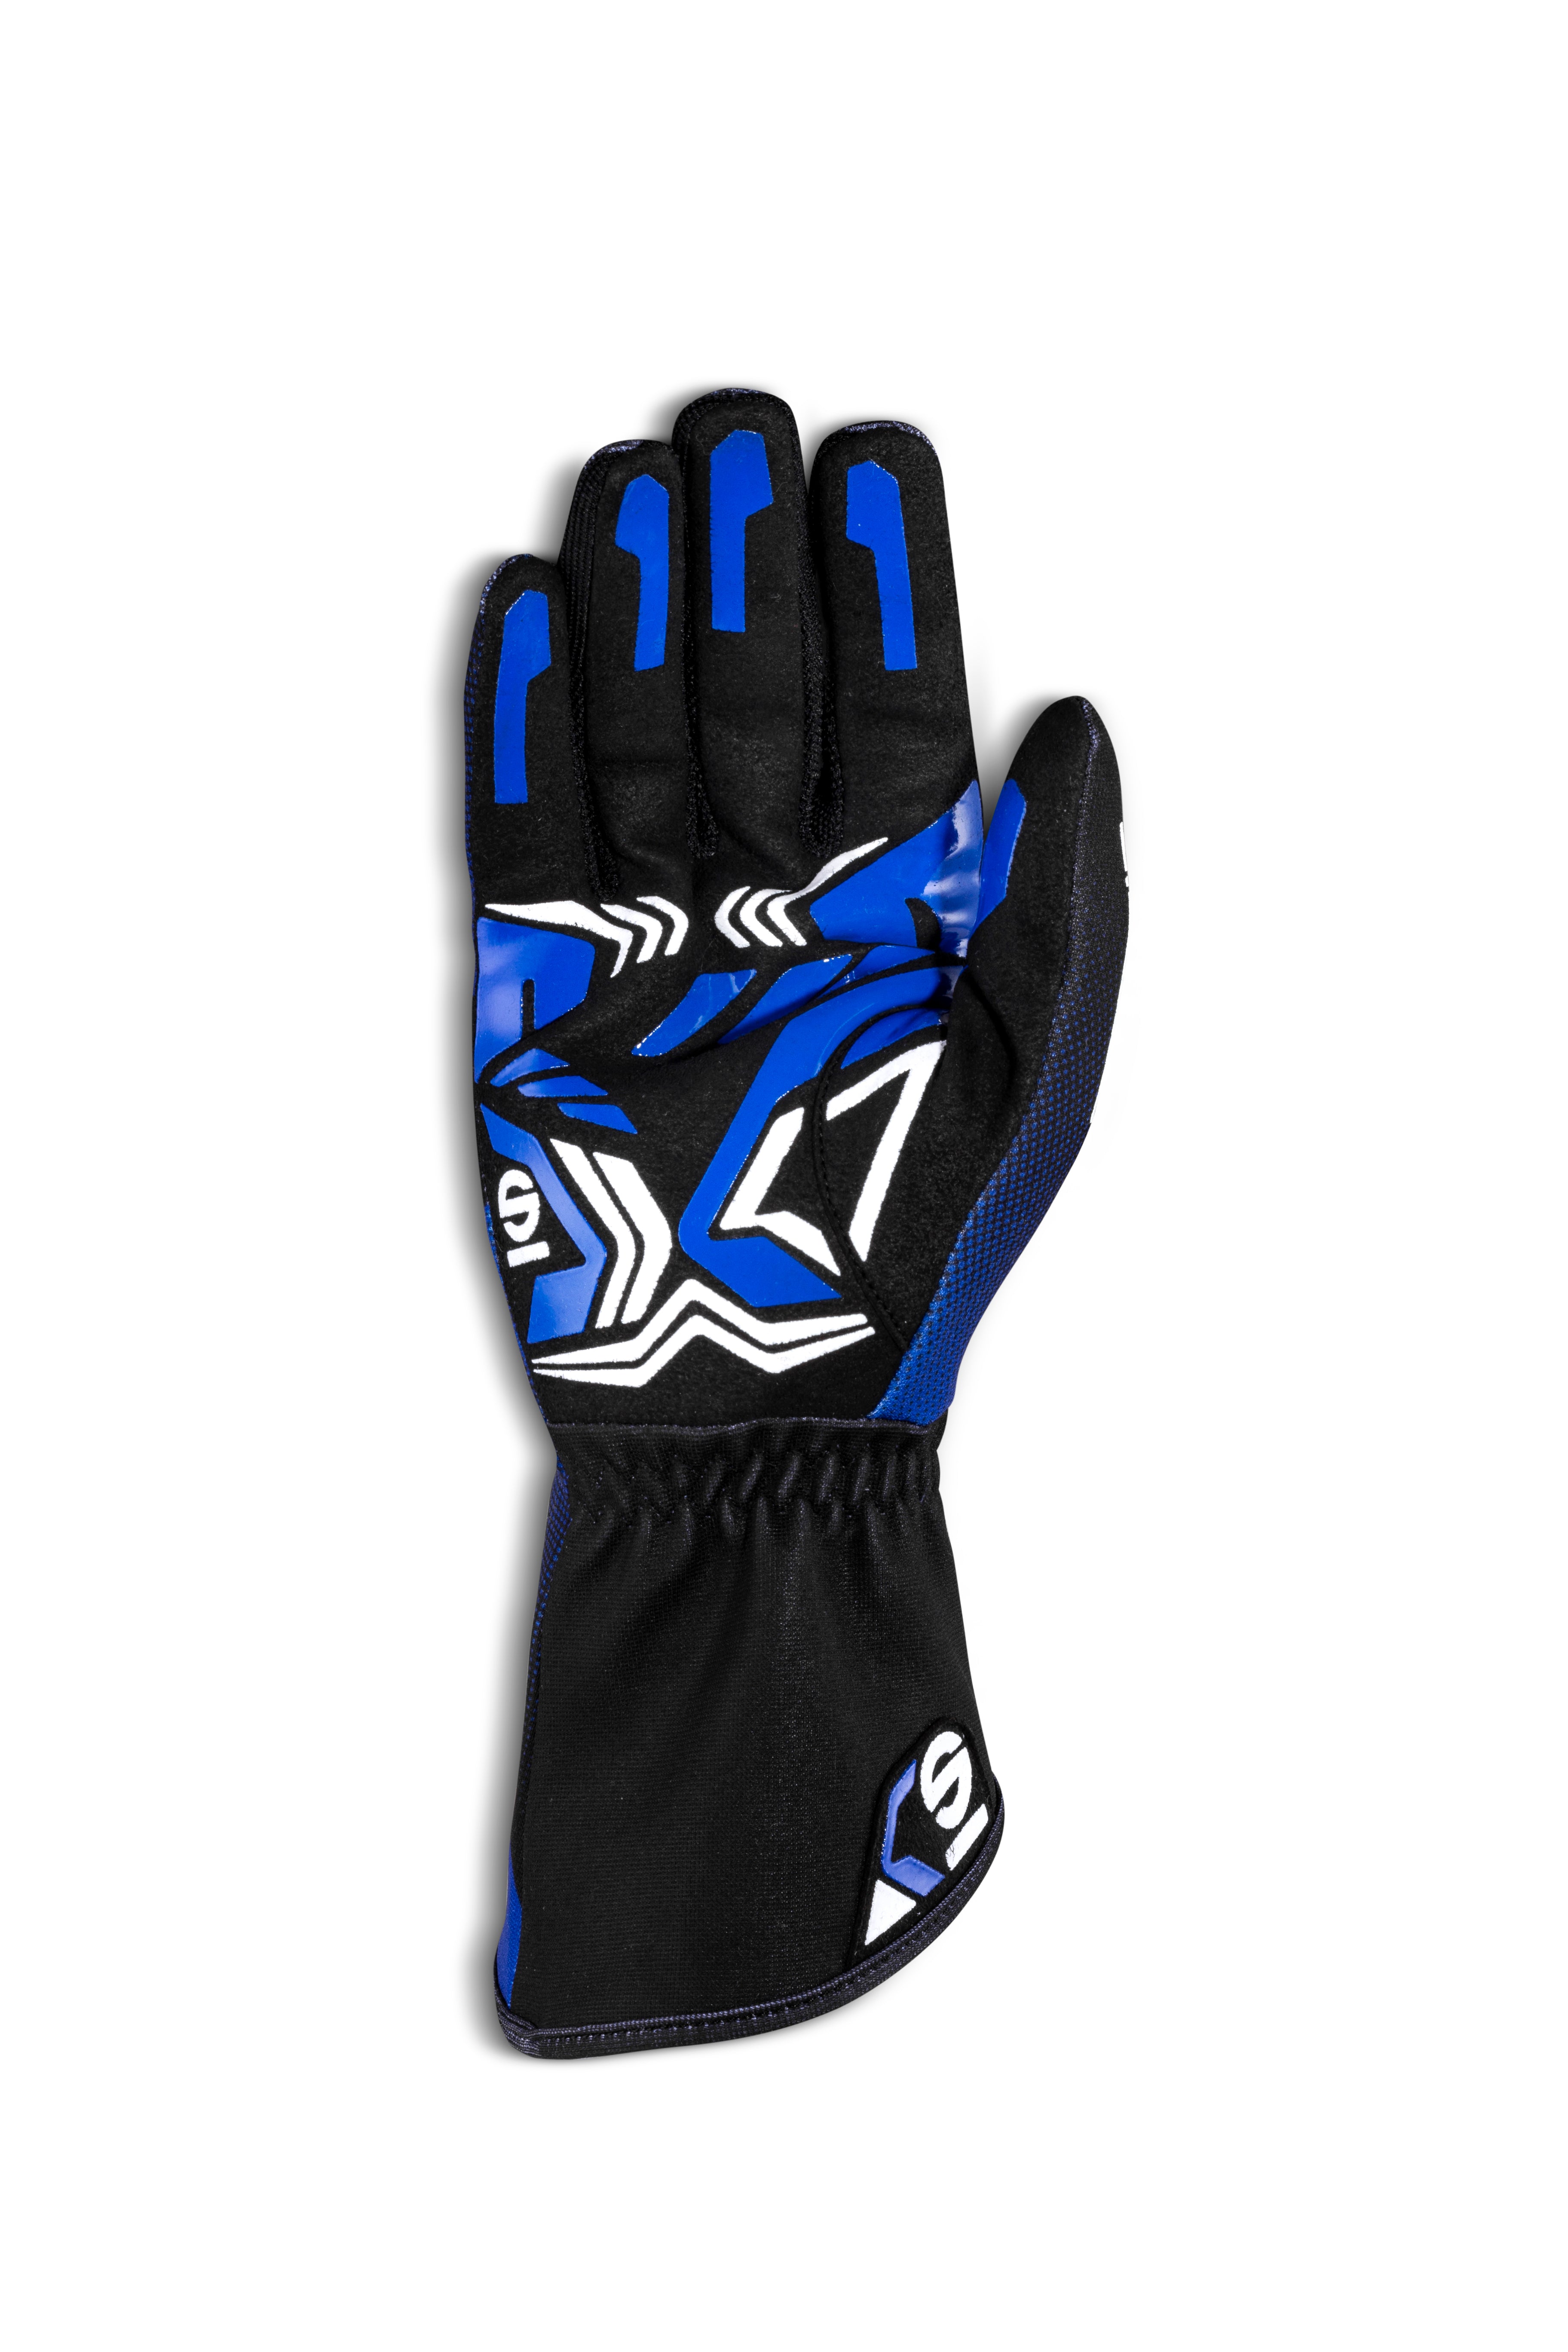 SPARCO 00255607BXNR Kart gloves RUSH, blue/black, size 7 Photo-1 